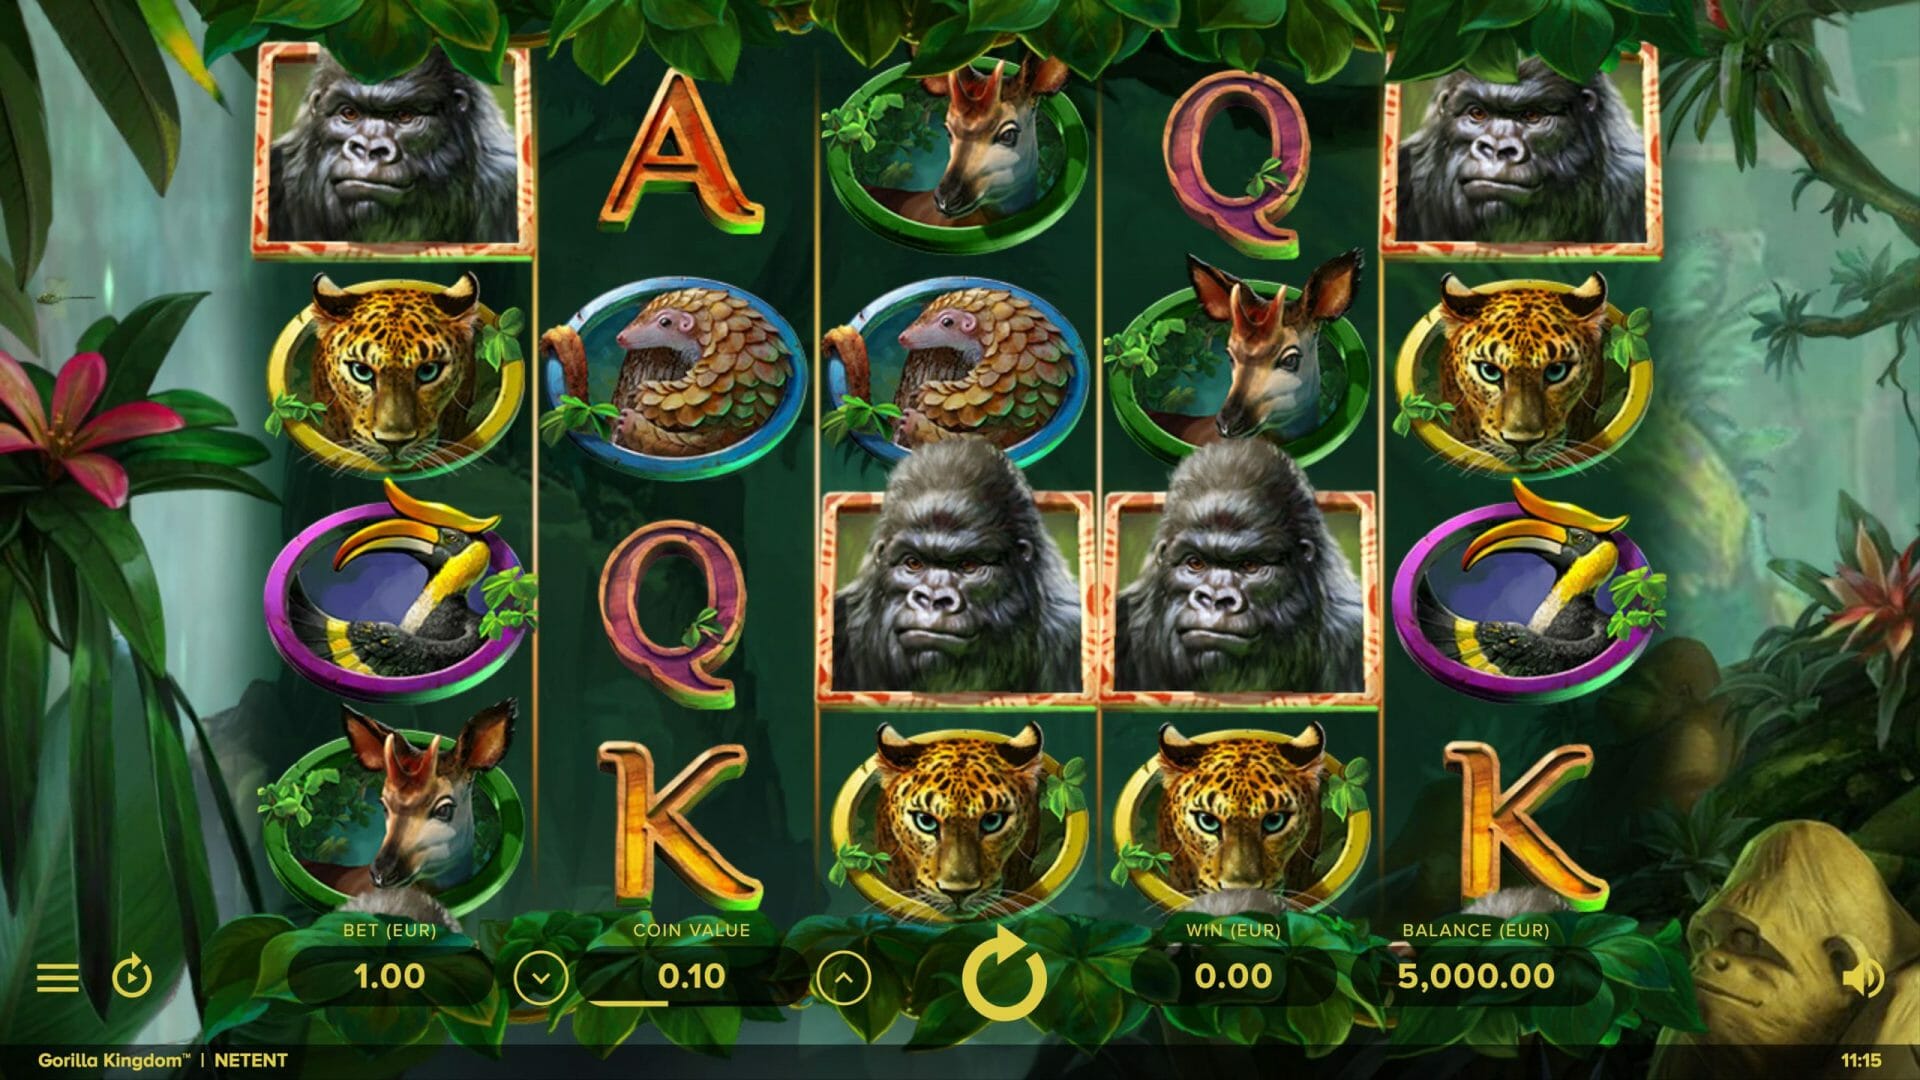 Gorilla Kingdom gameplay screenshot